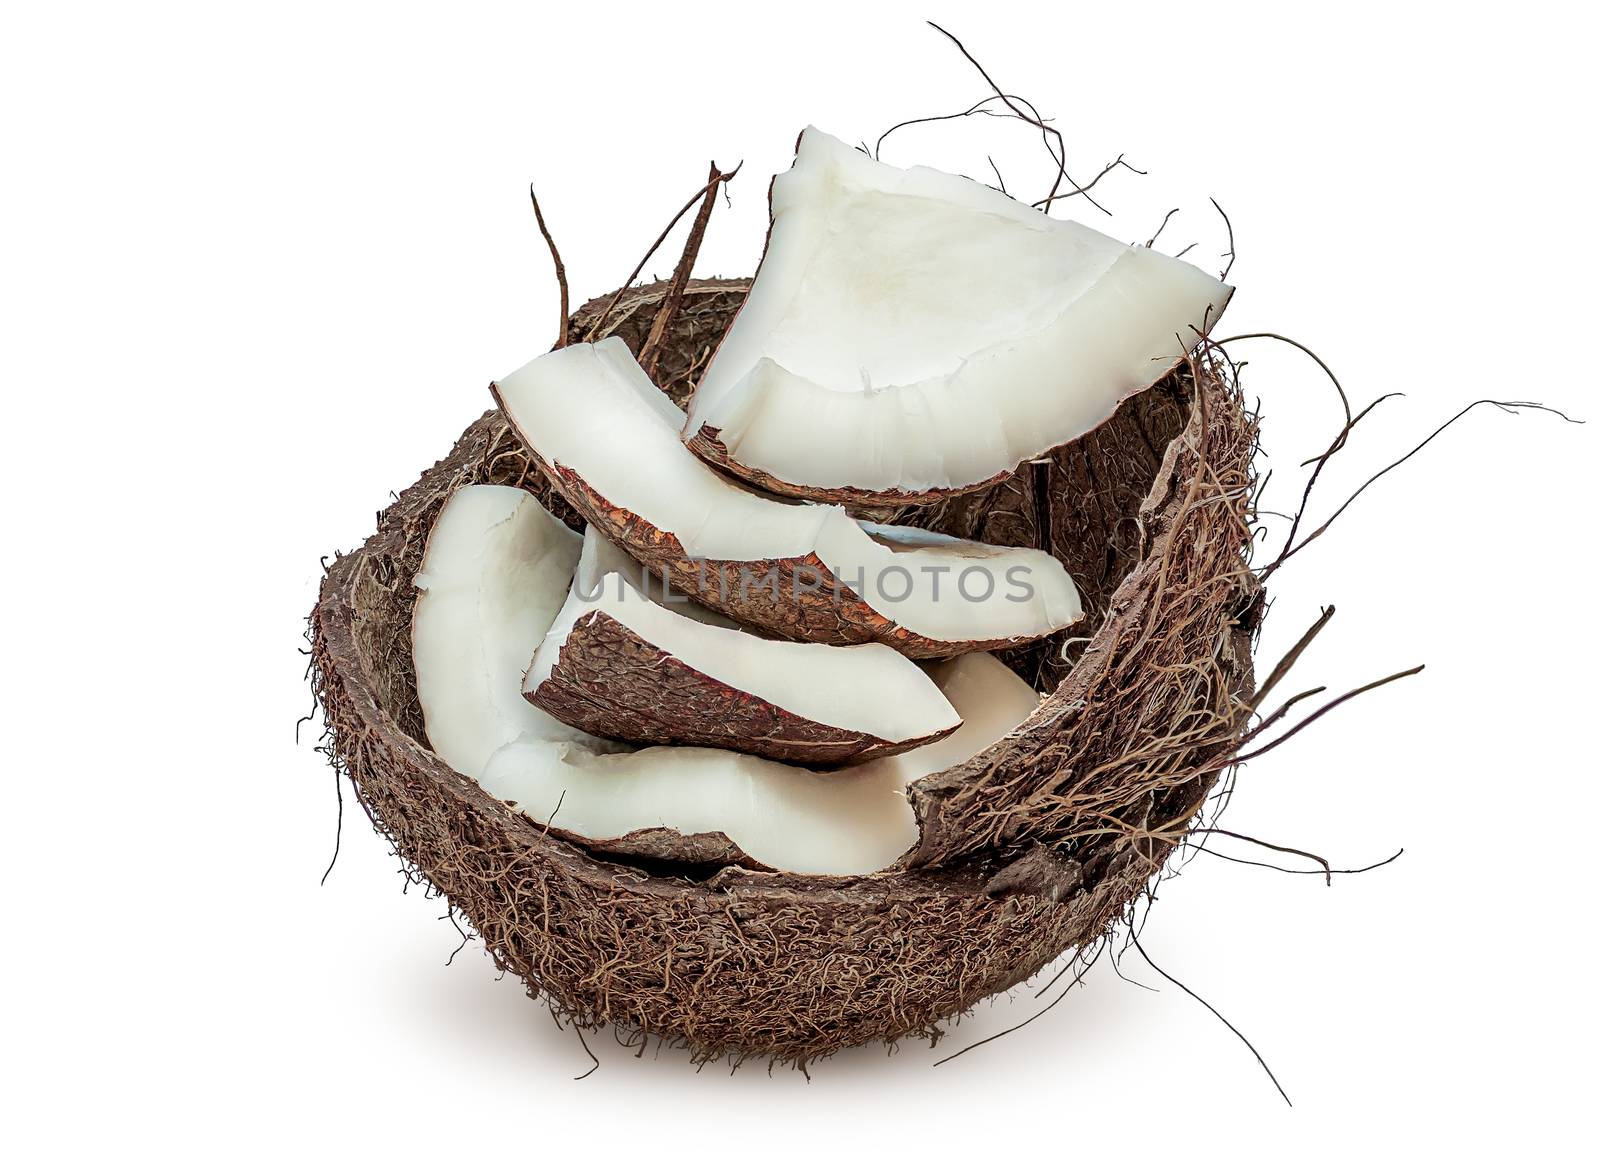 Closeup coconut pulp in shell by Cipariss